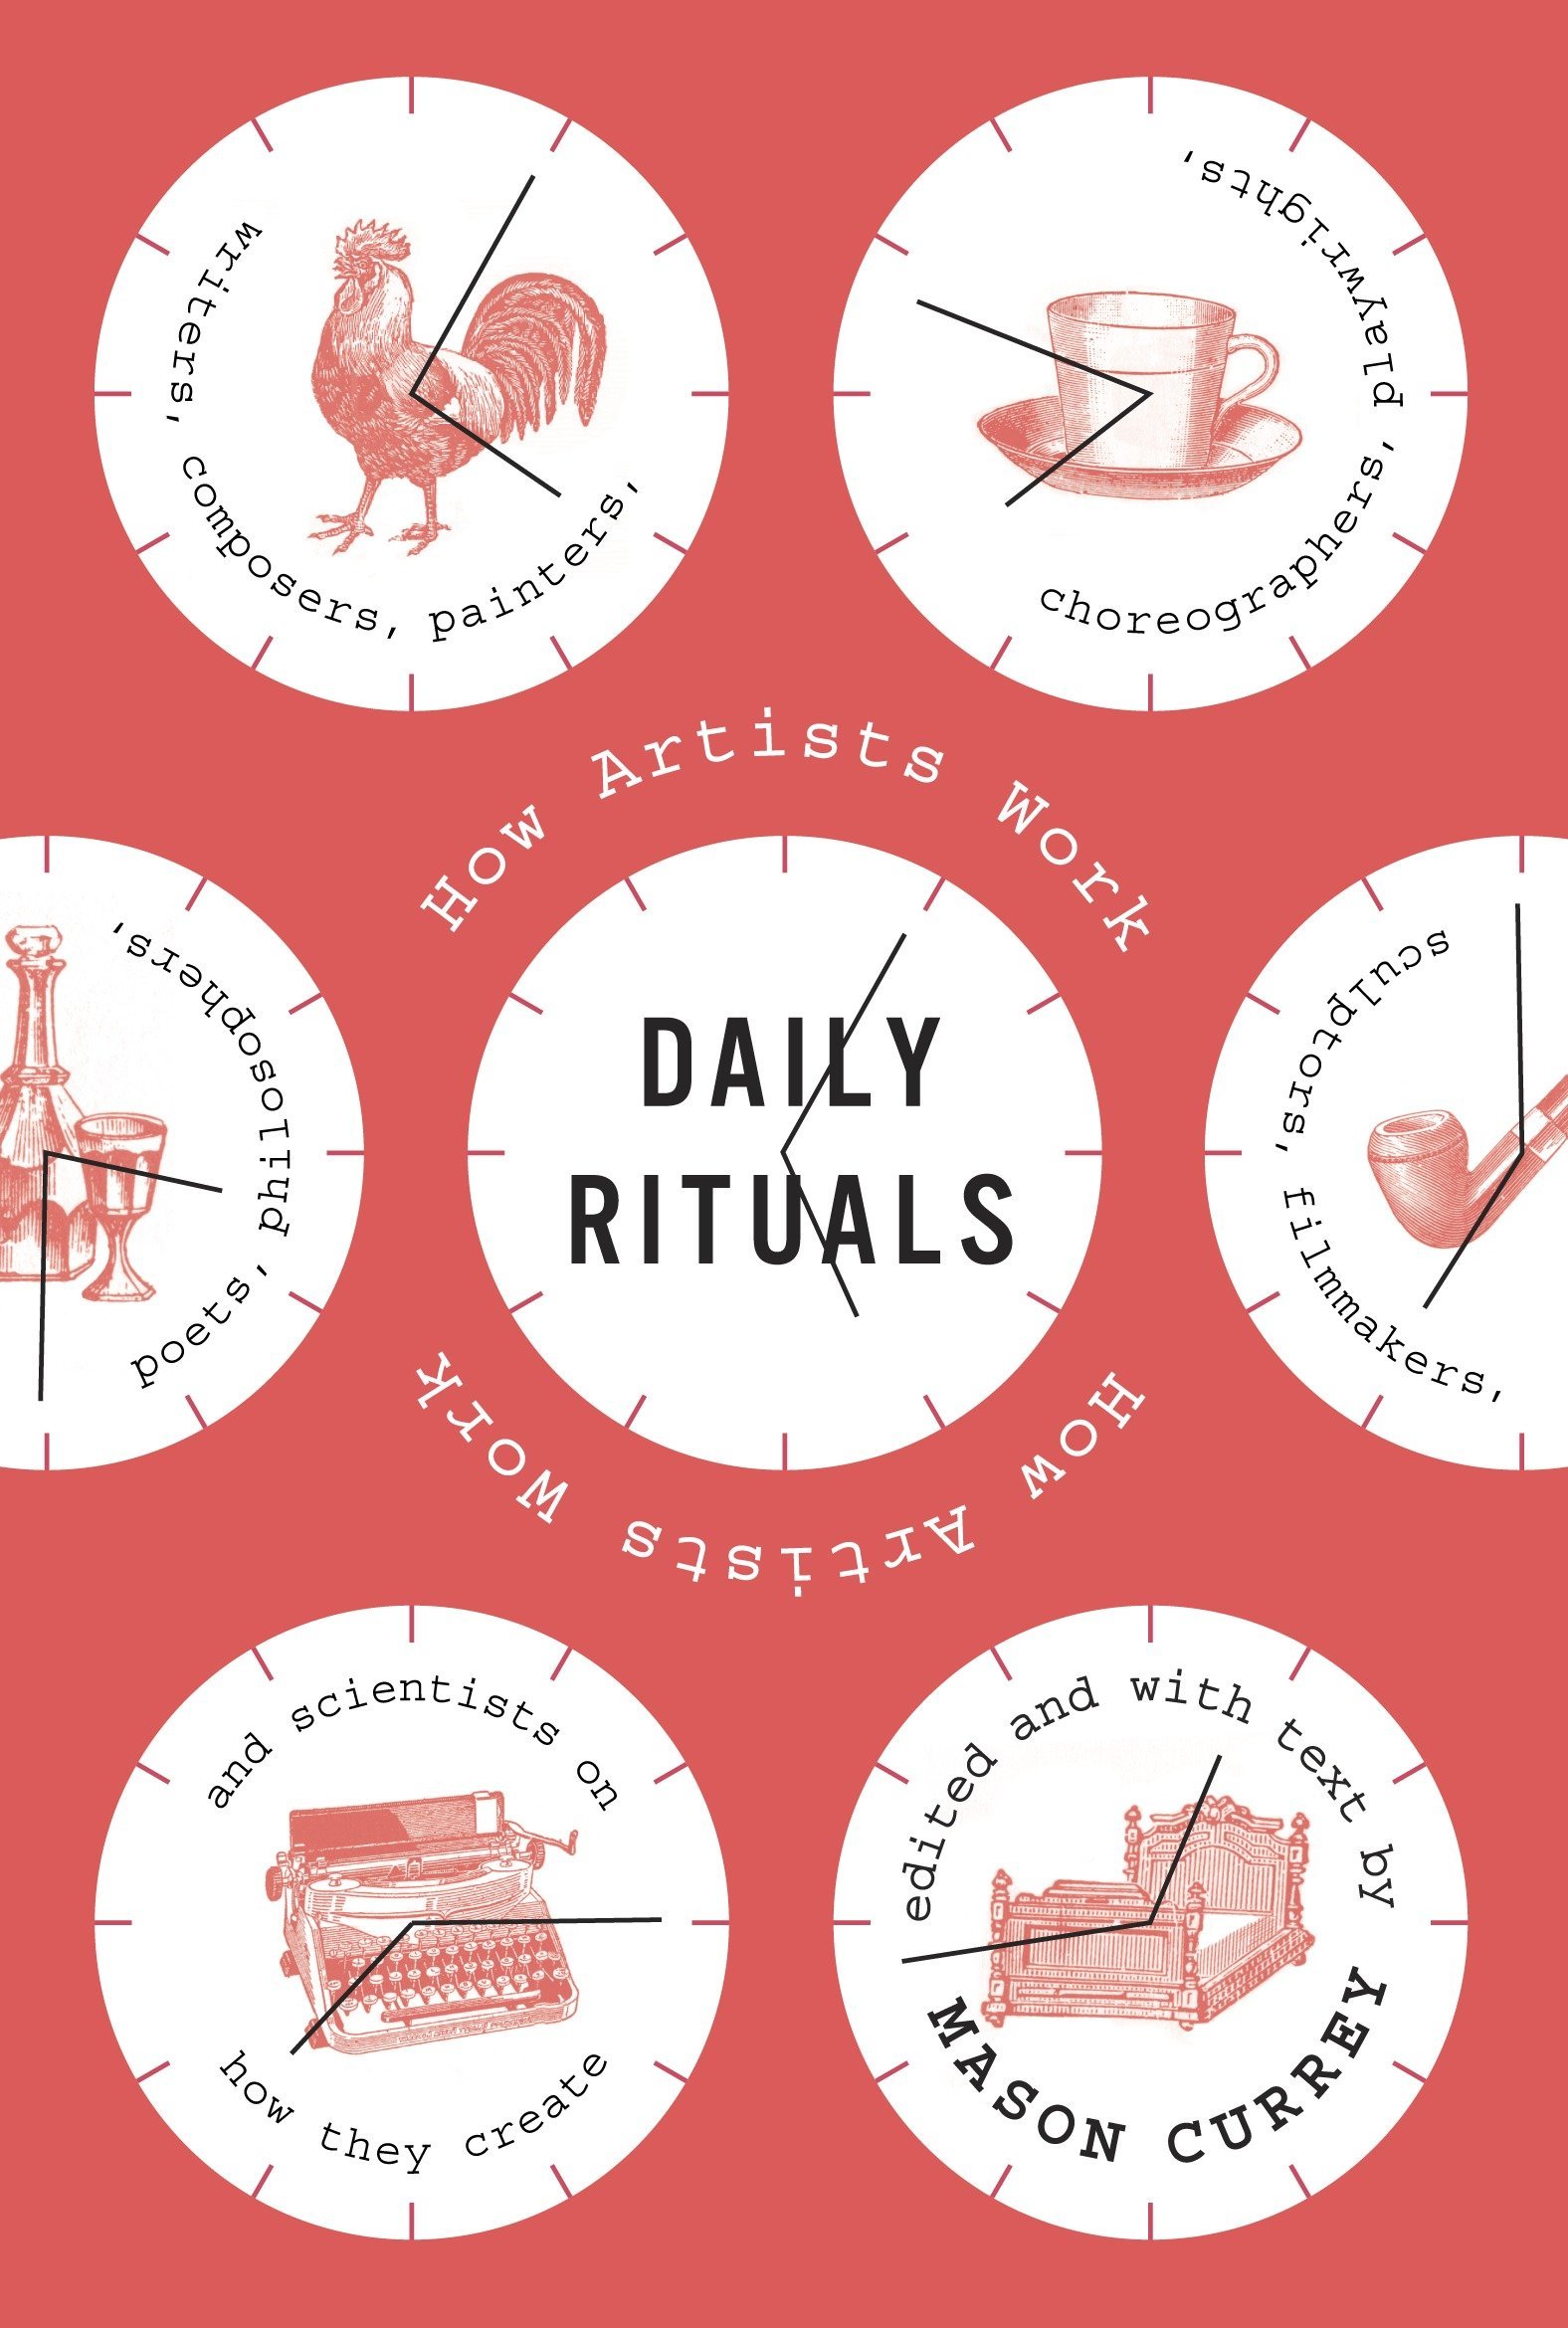 Daily Rituals book cover